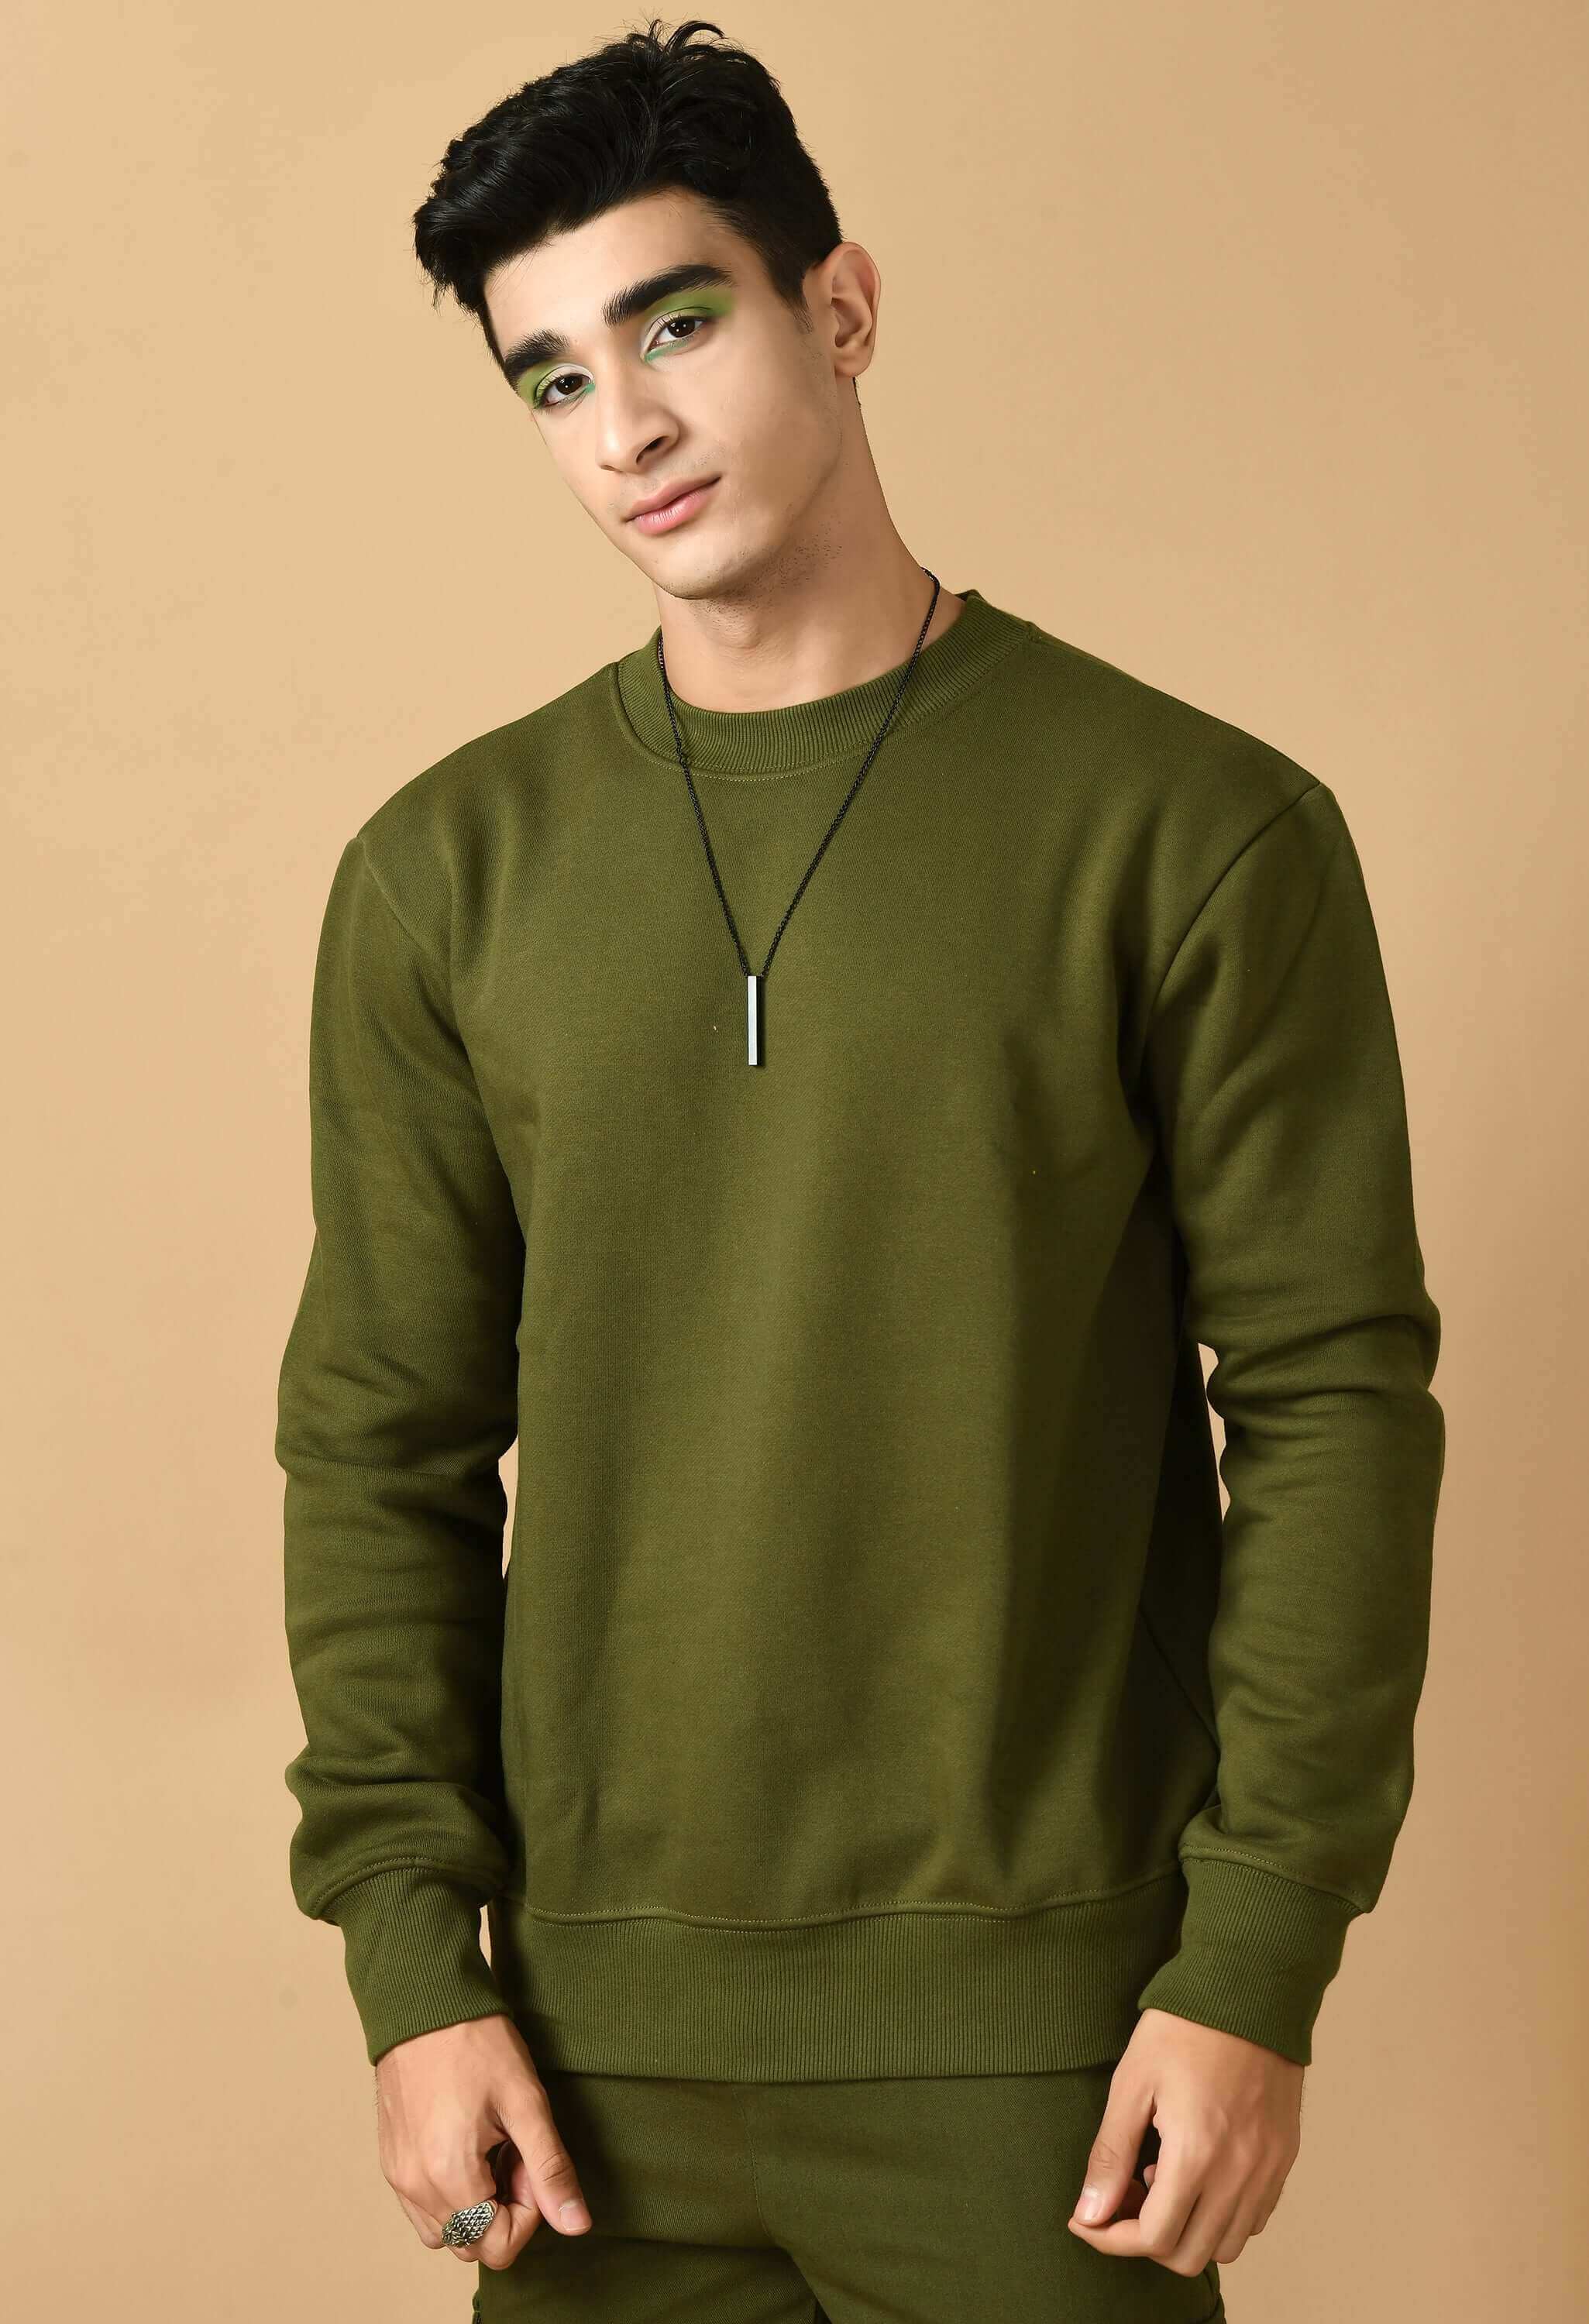 Brain printed olive green color sweatshirt 